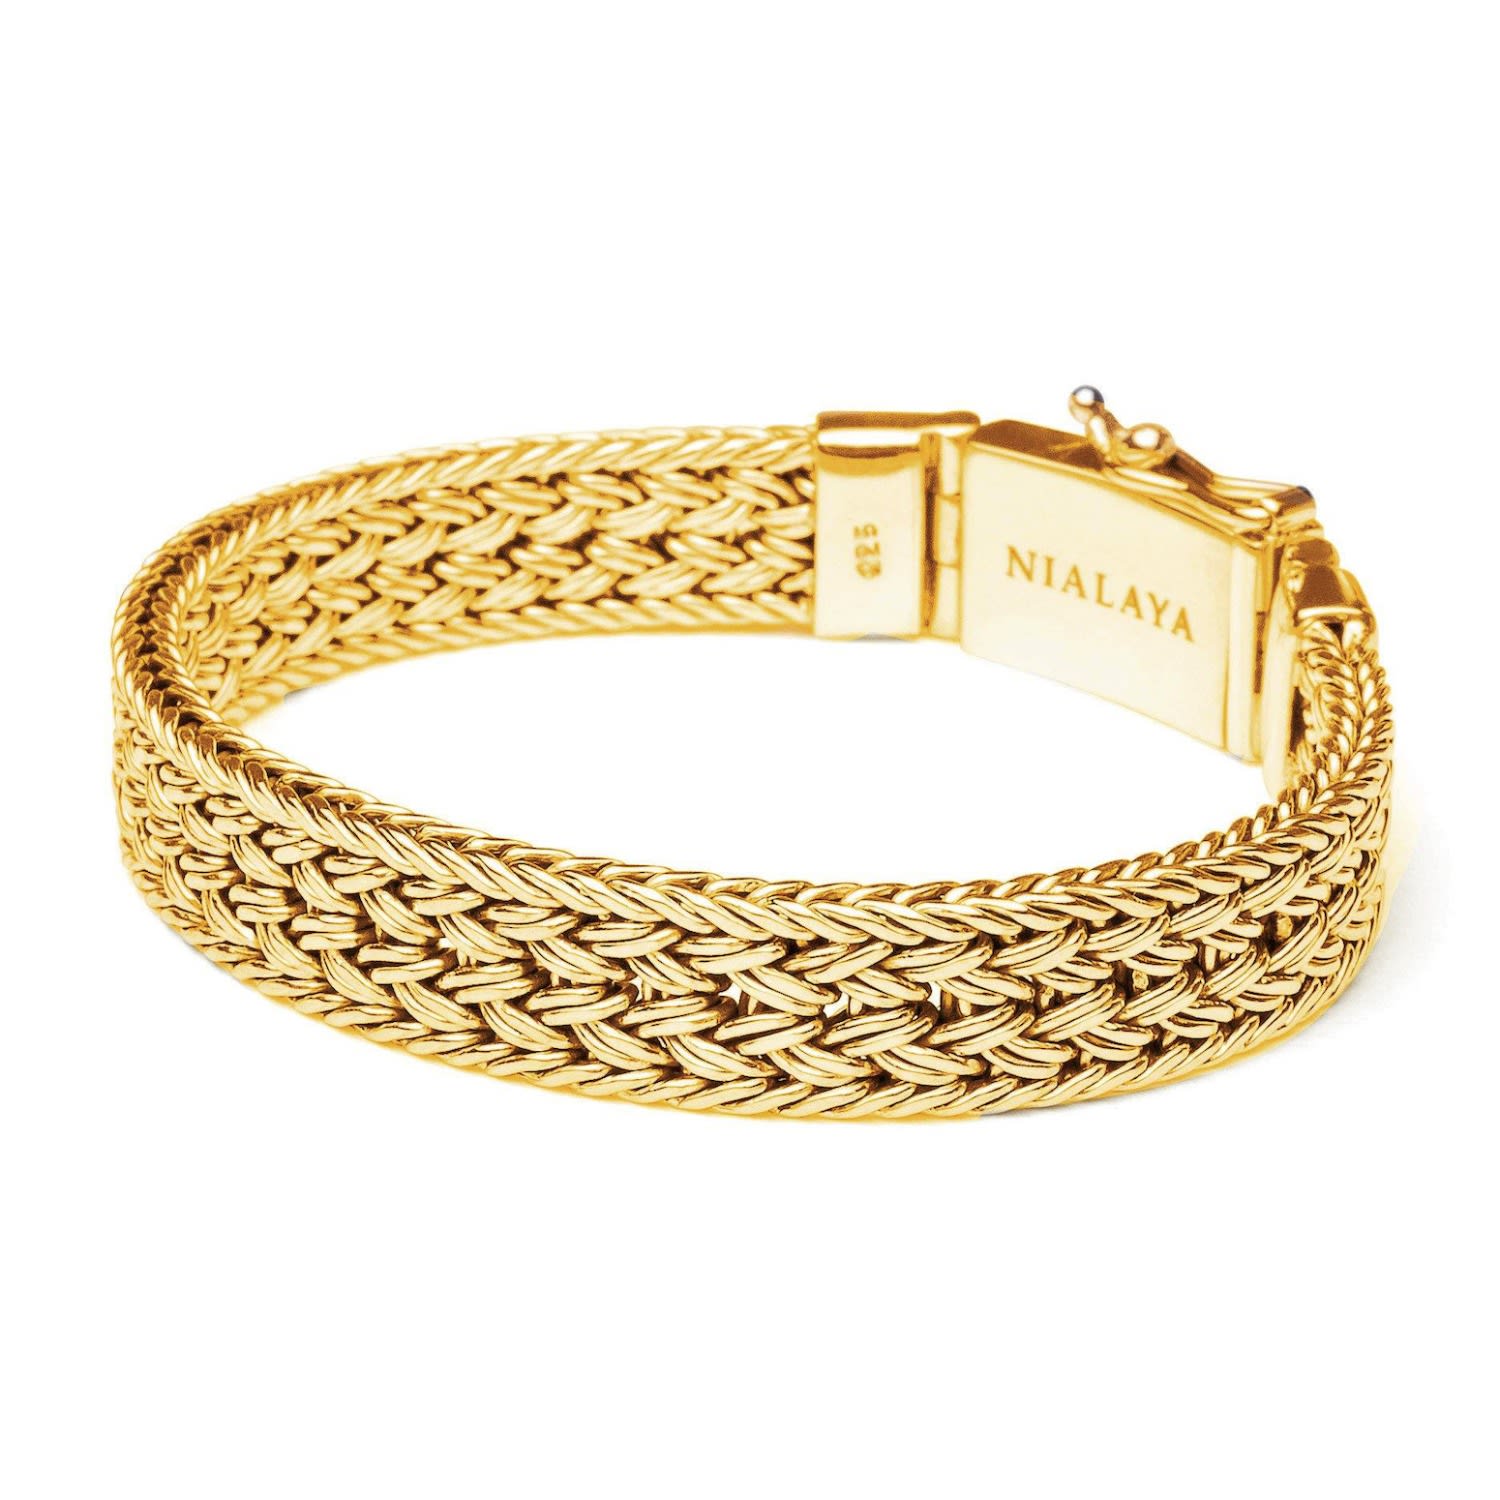 Nialaya Men's Gold Braided Chain Bracelet